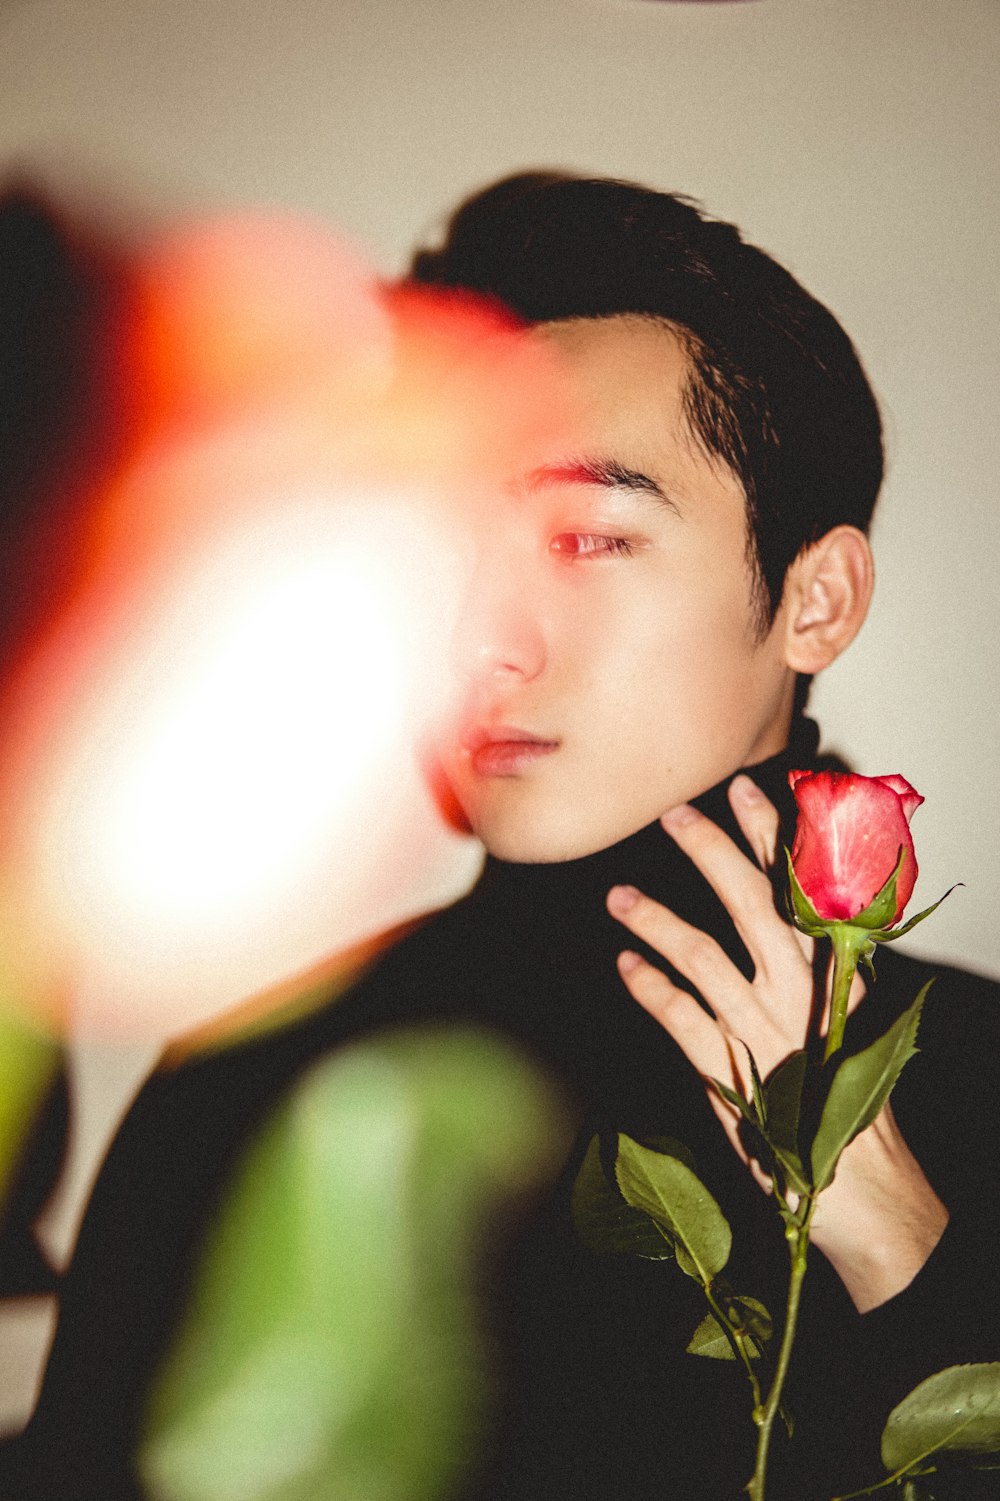 man holding red rose flower